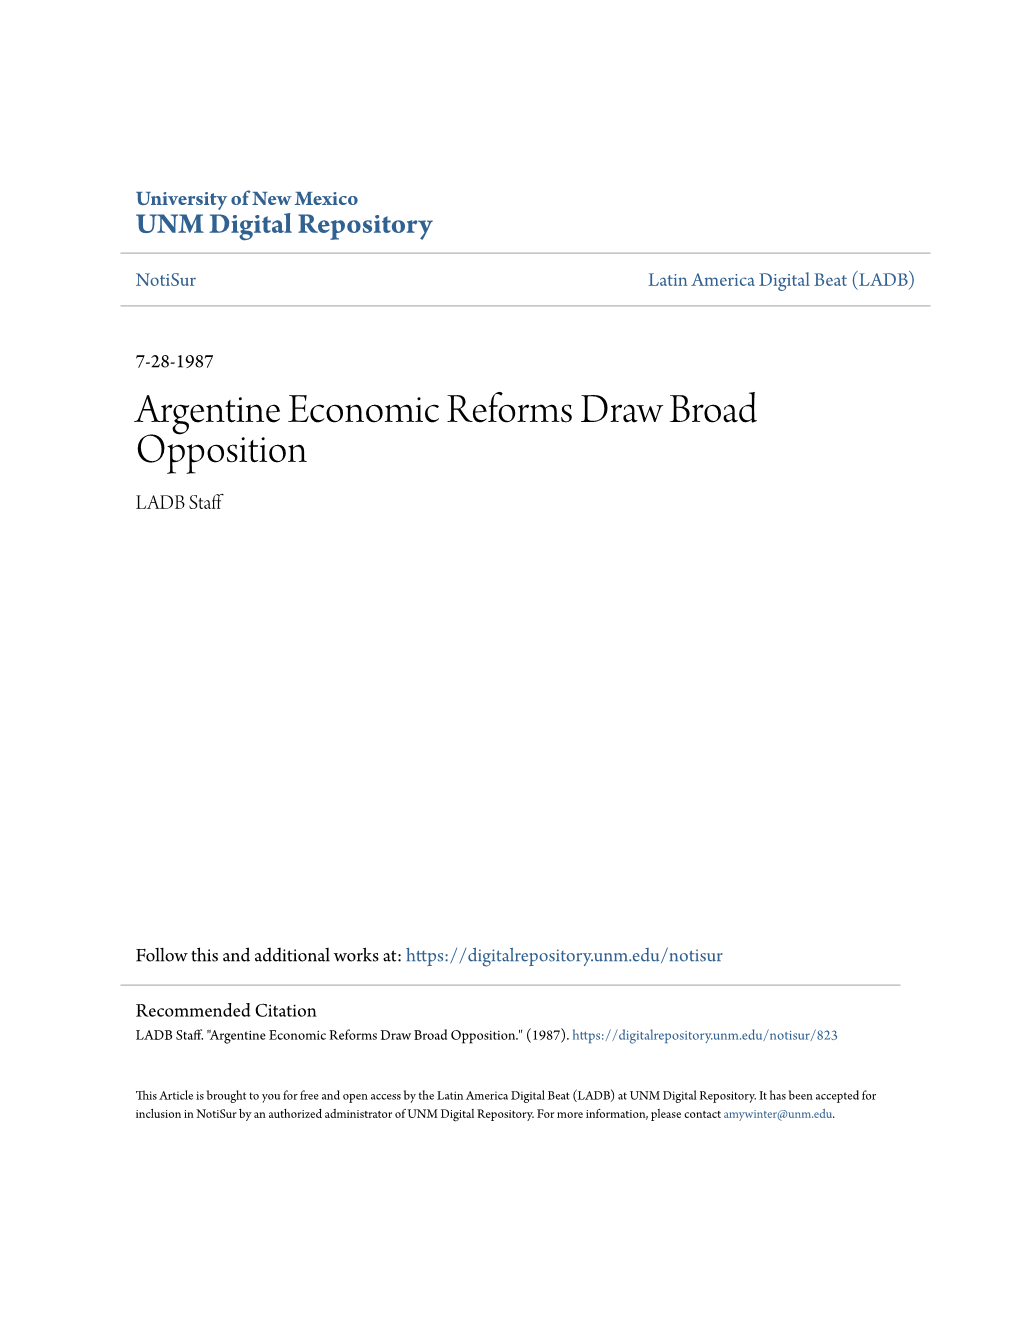 Argentine Economic Reforms Draw Broad Opposition LADB Staff